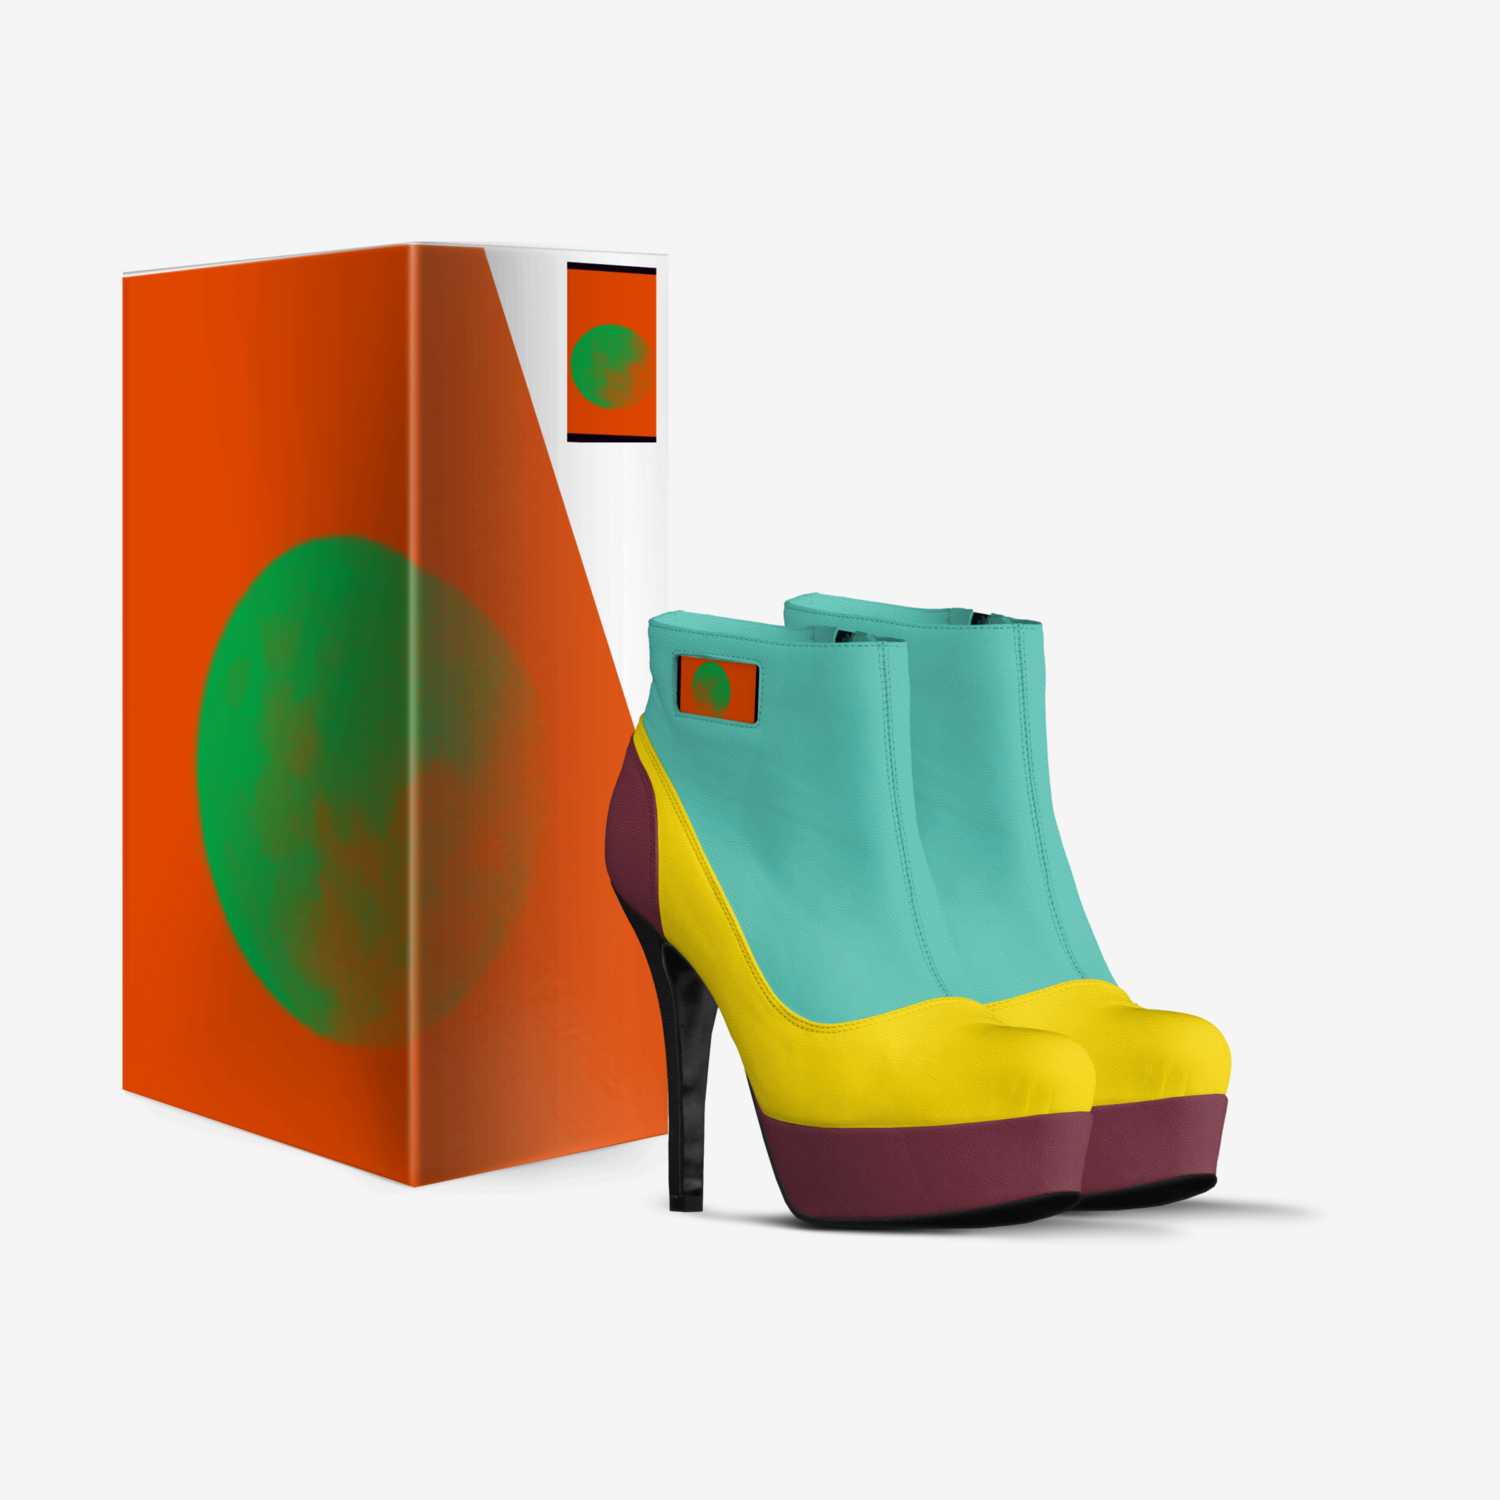 Doreen custom made in Italy shoes by Dan Hurwitz | Box view